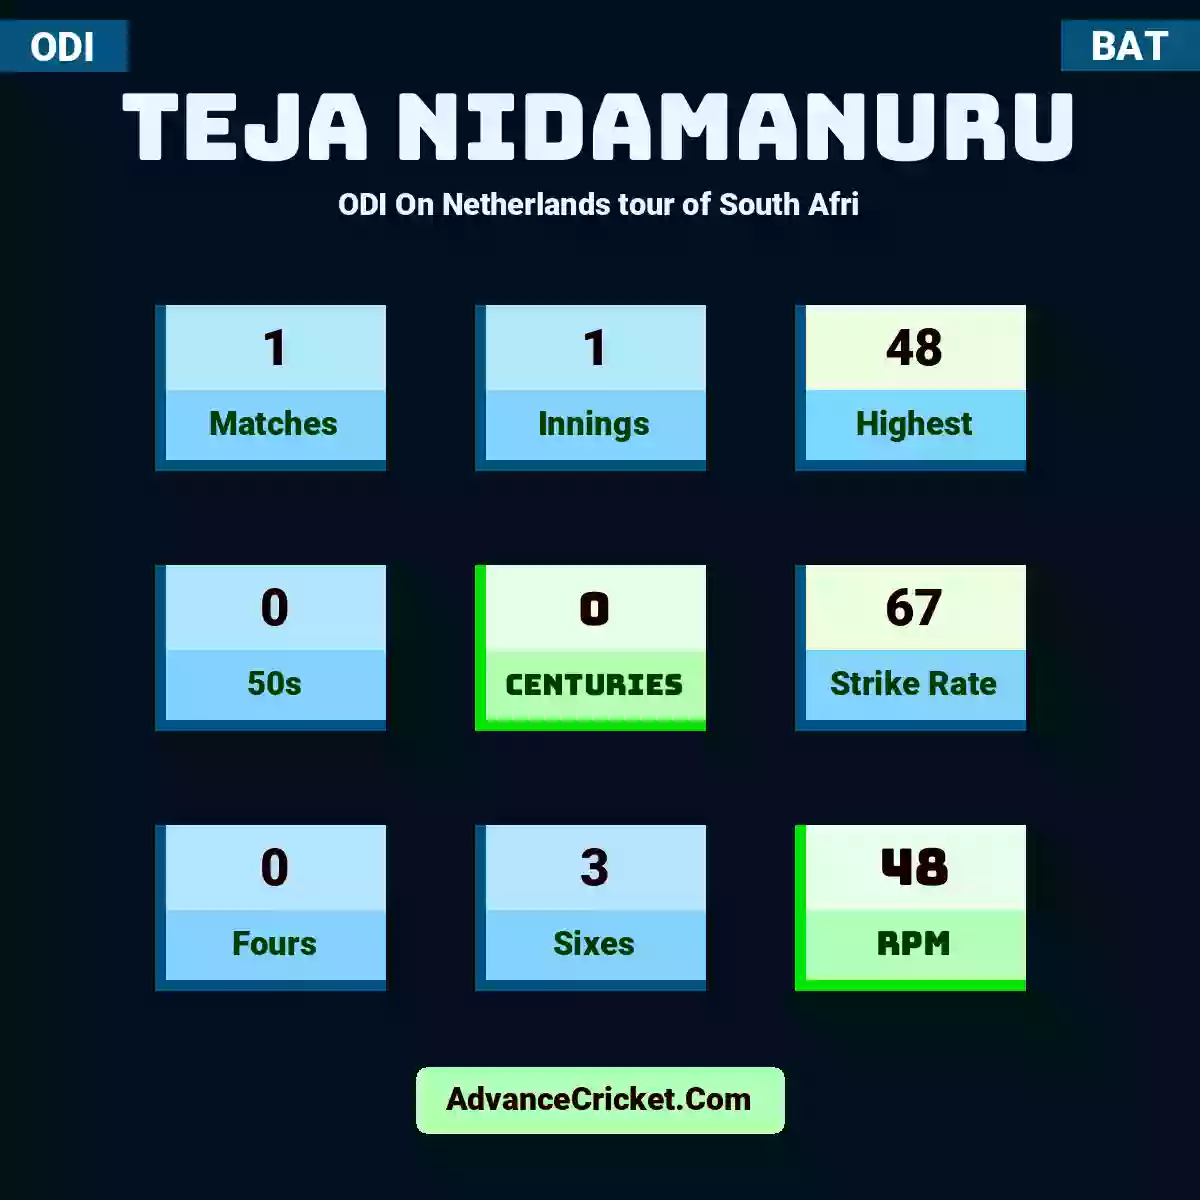 Teja Nidamanuru ODI  On Netherlands tour of South Afri, Teja Nidamanuru played 1 matches, scored 48 runs as highest, 0 half-centuries, and 0 centuries, with a strike rate of 67. T.Nidamanuru hit 0 fours and 3 sixes, with an RPM of 48.